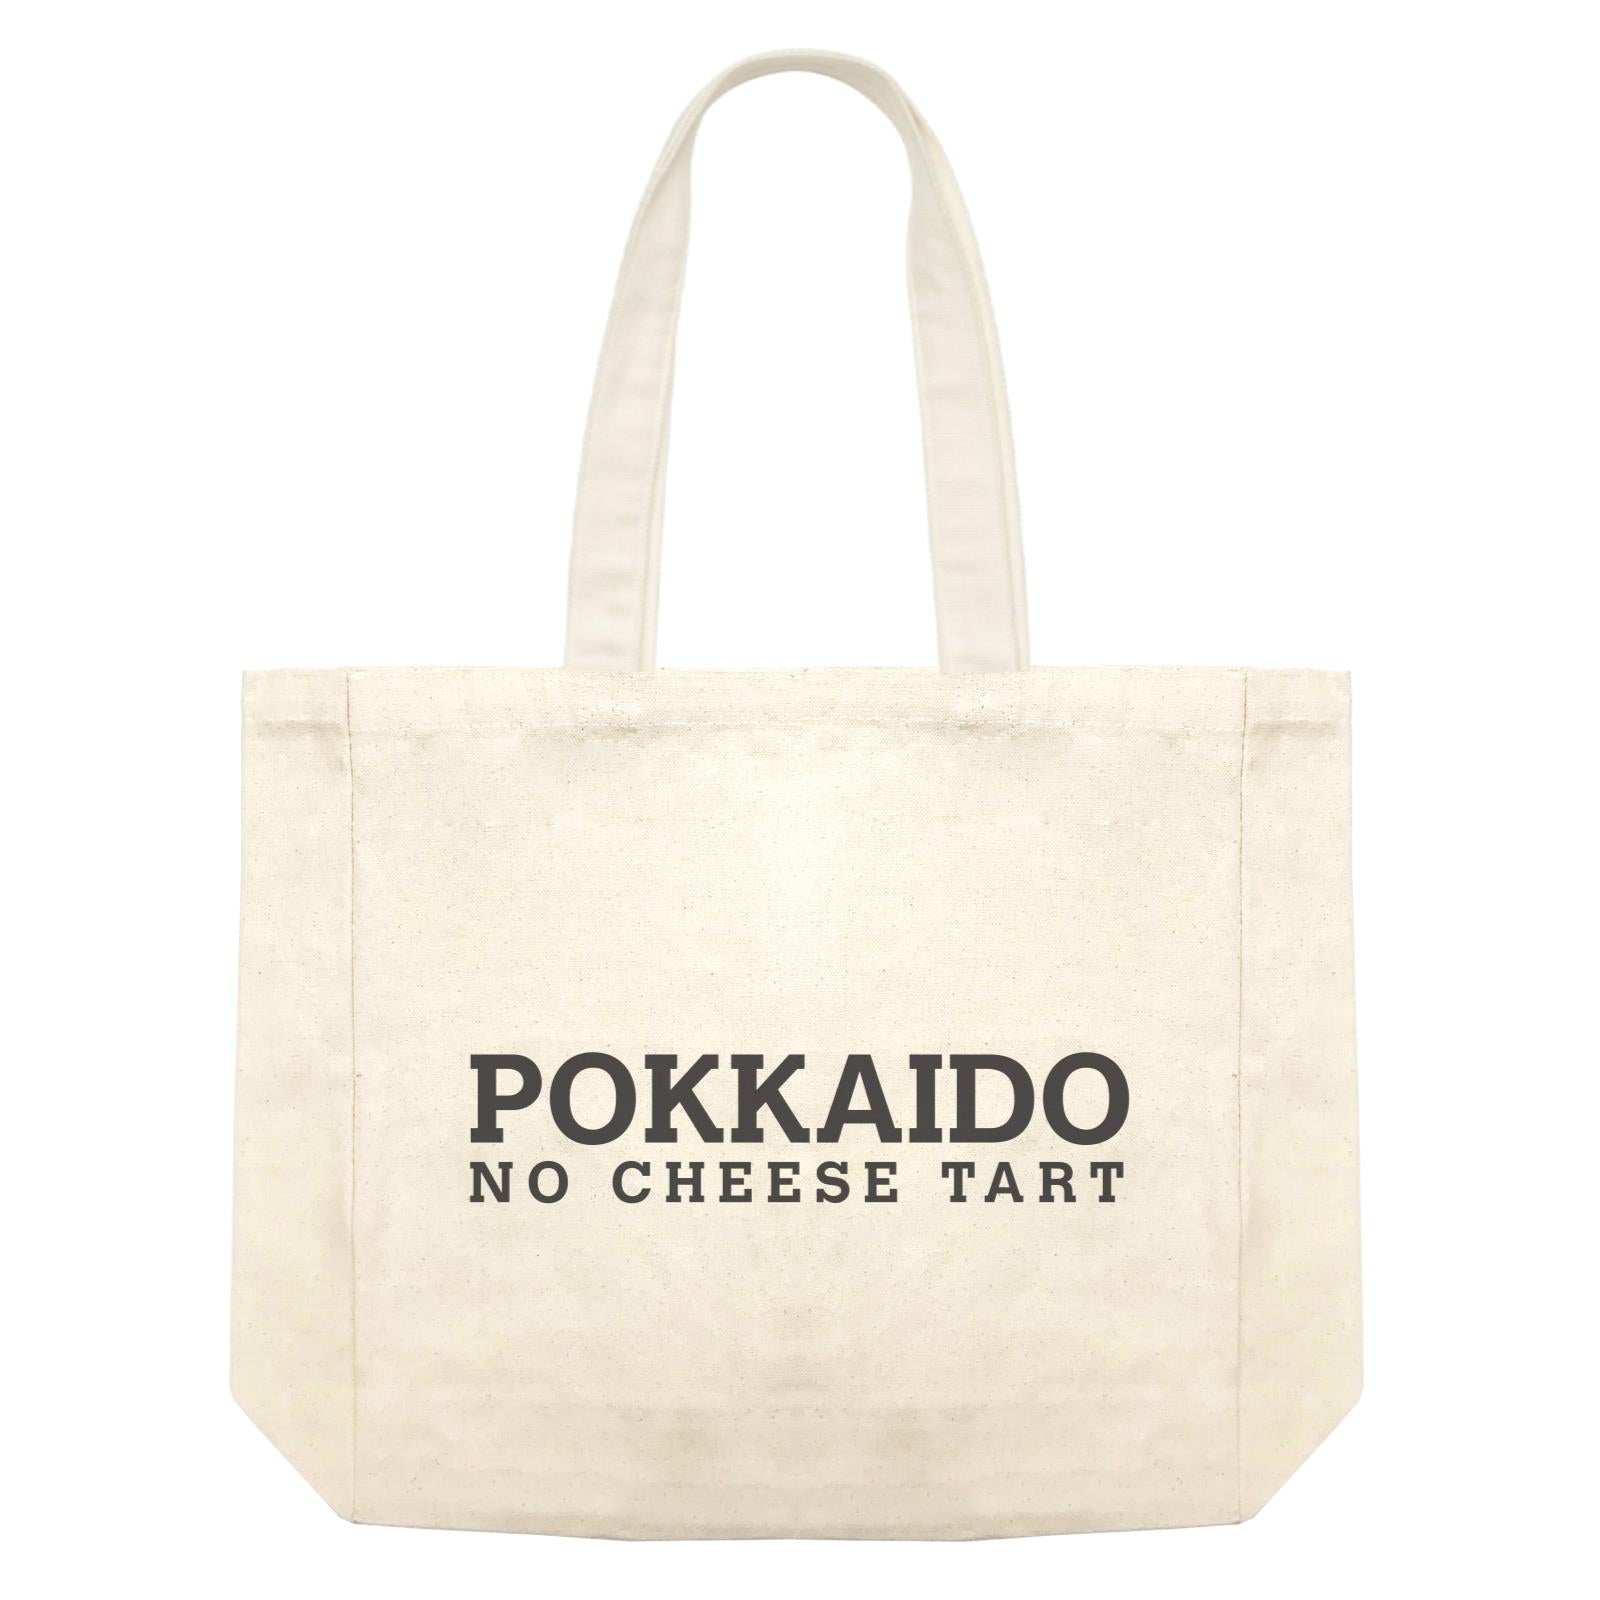 Slang Statement Pokkaido No Cheese Tart Accessories Shopping Bag